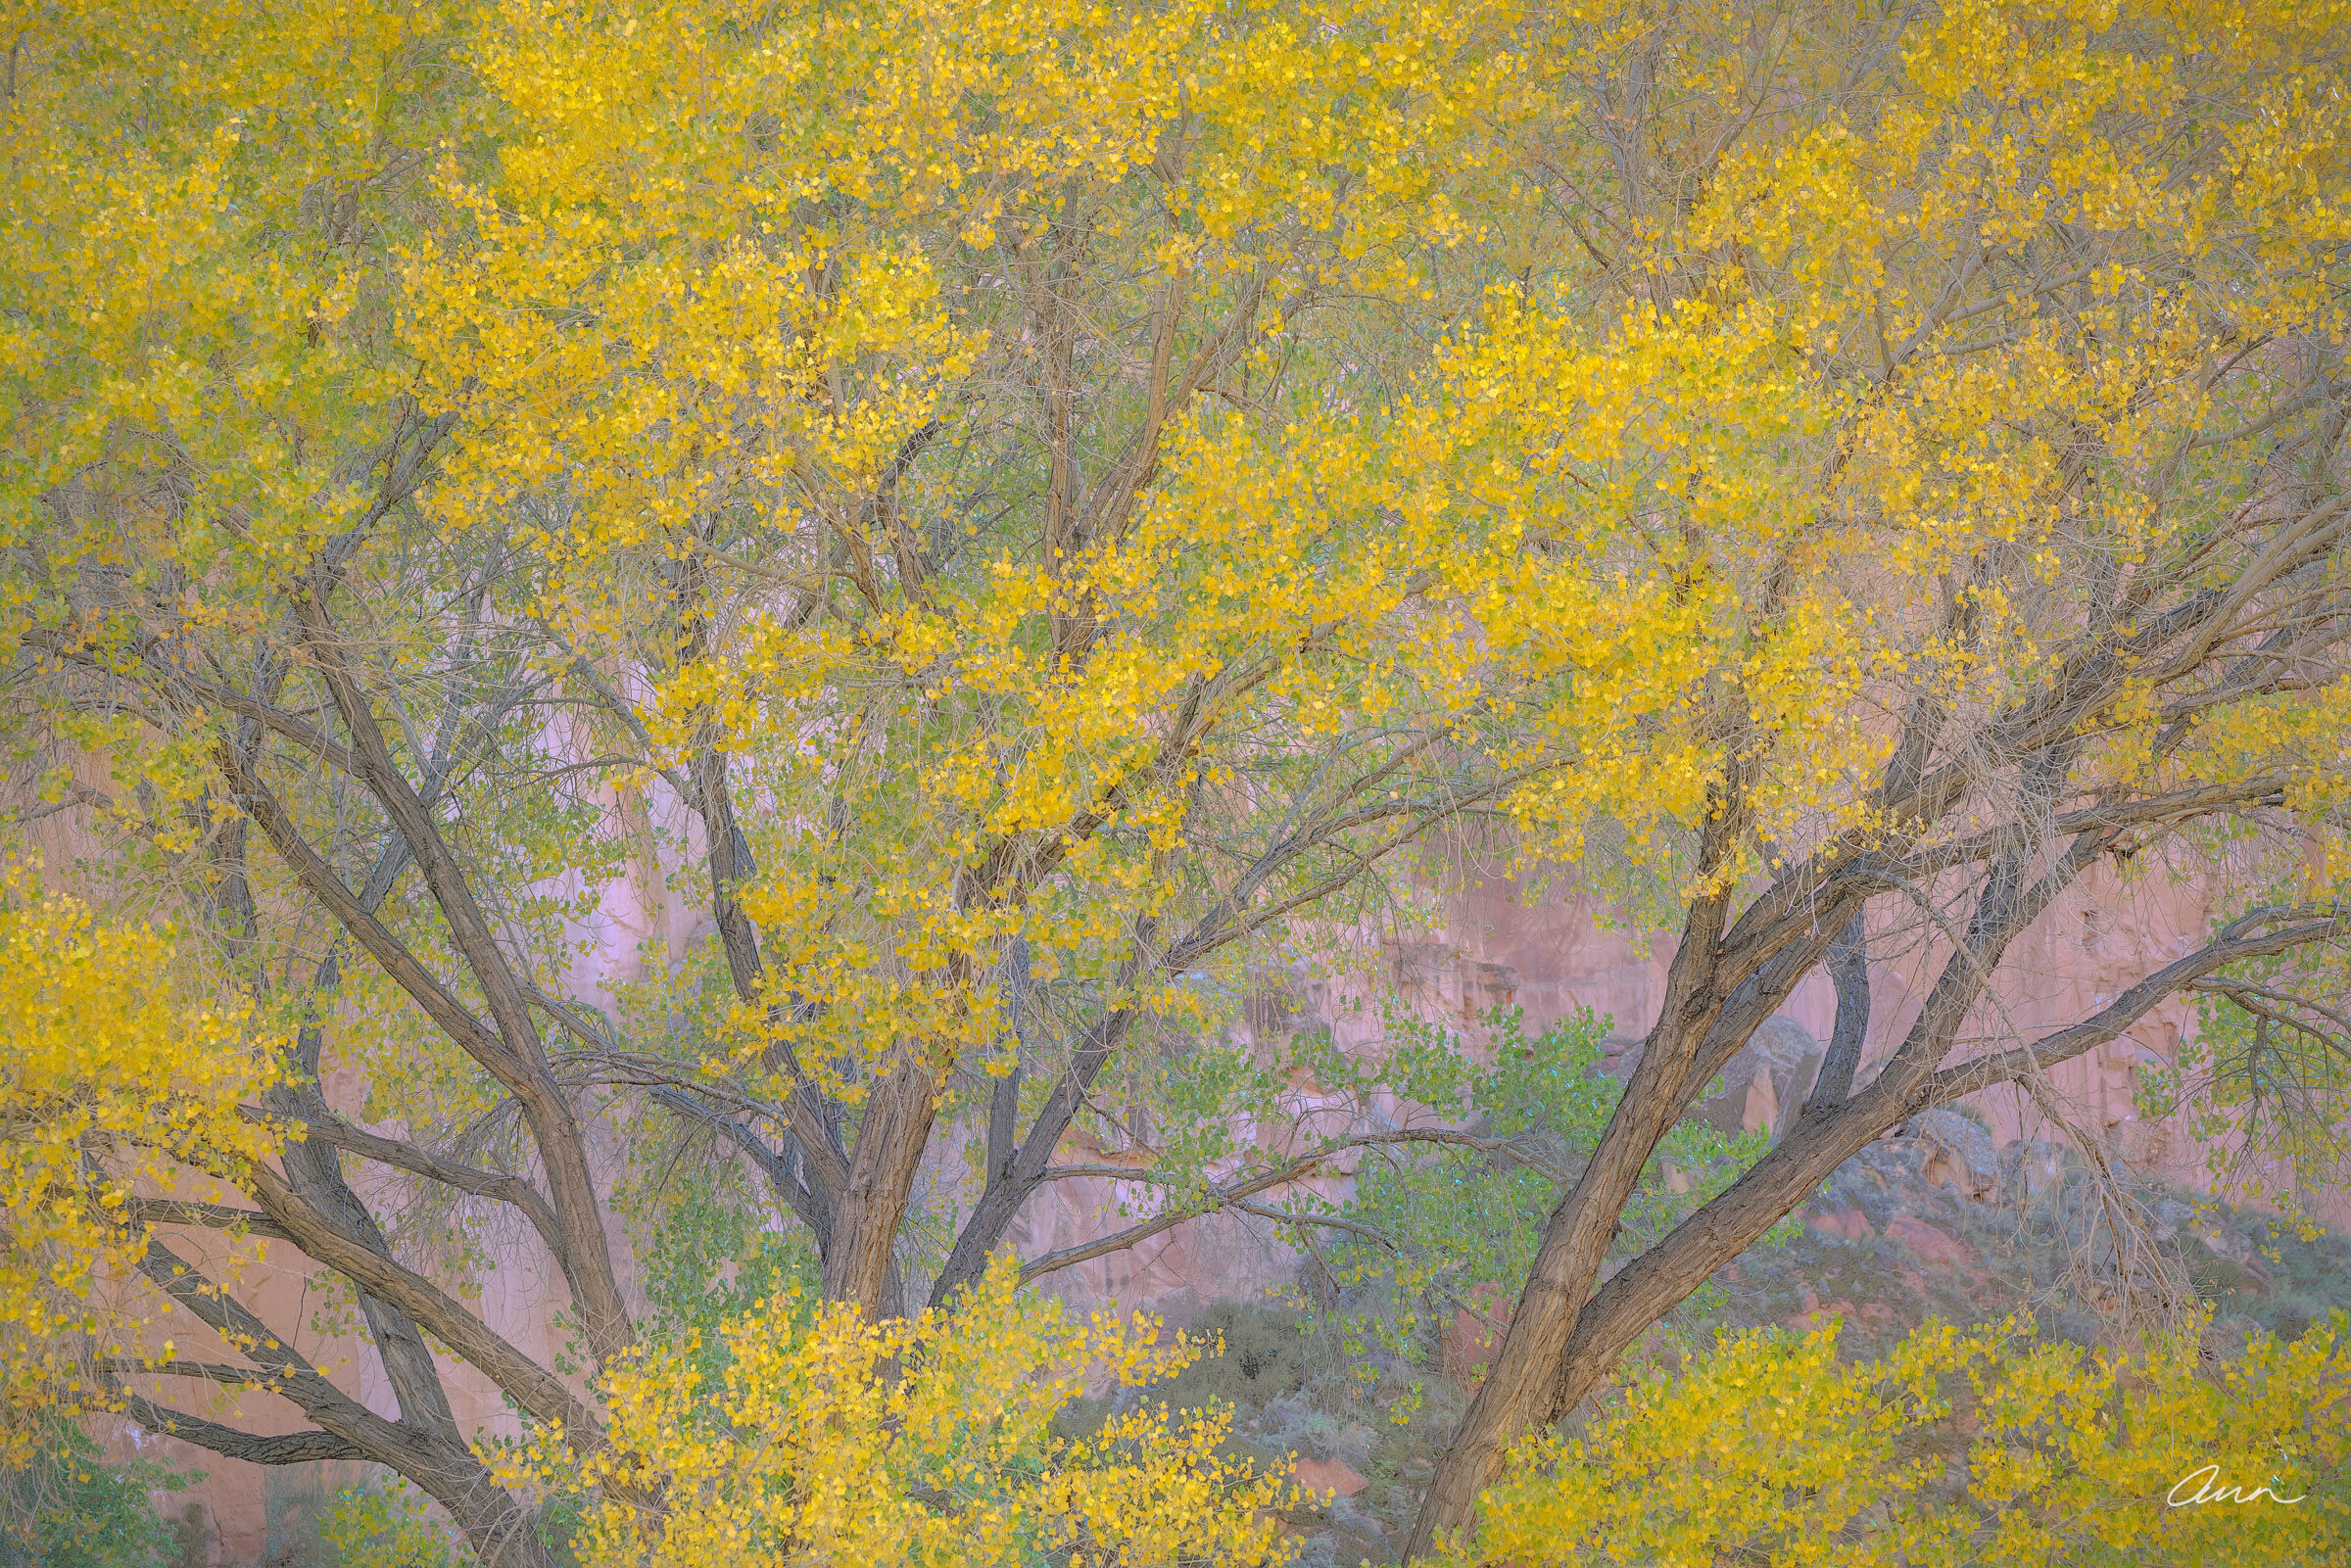 Fremont cottonwood tree close up in autumn